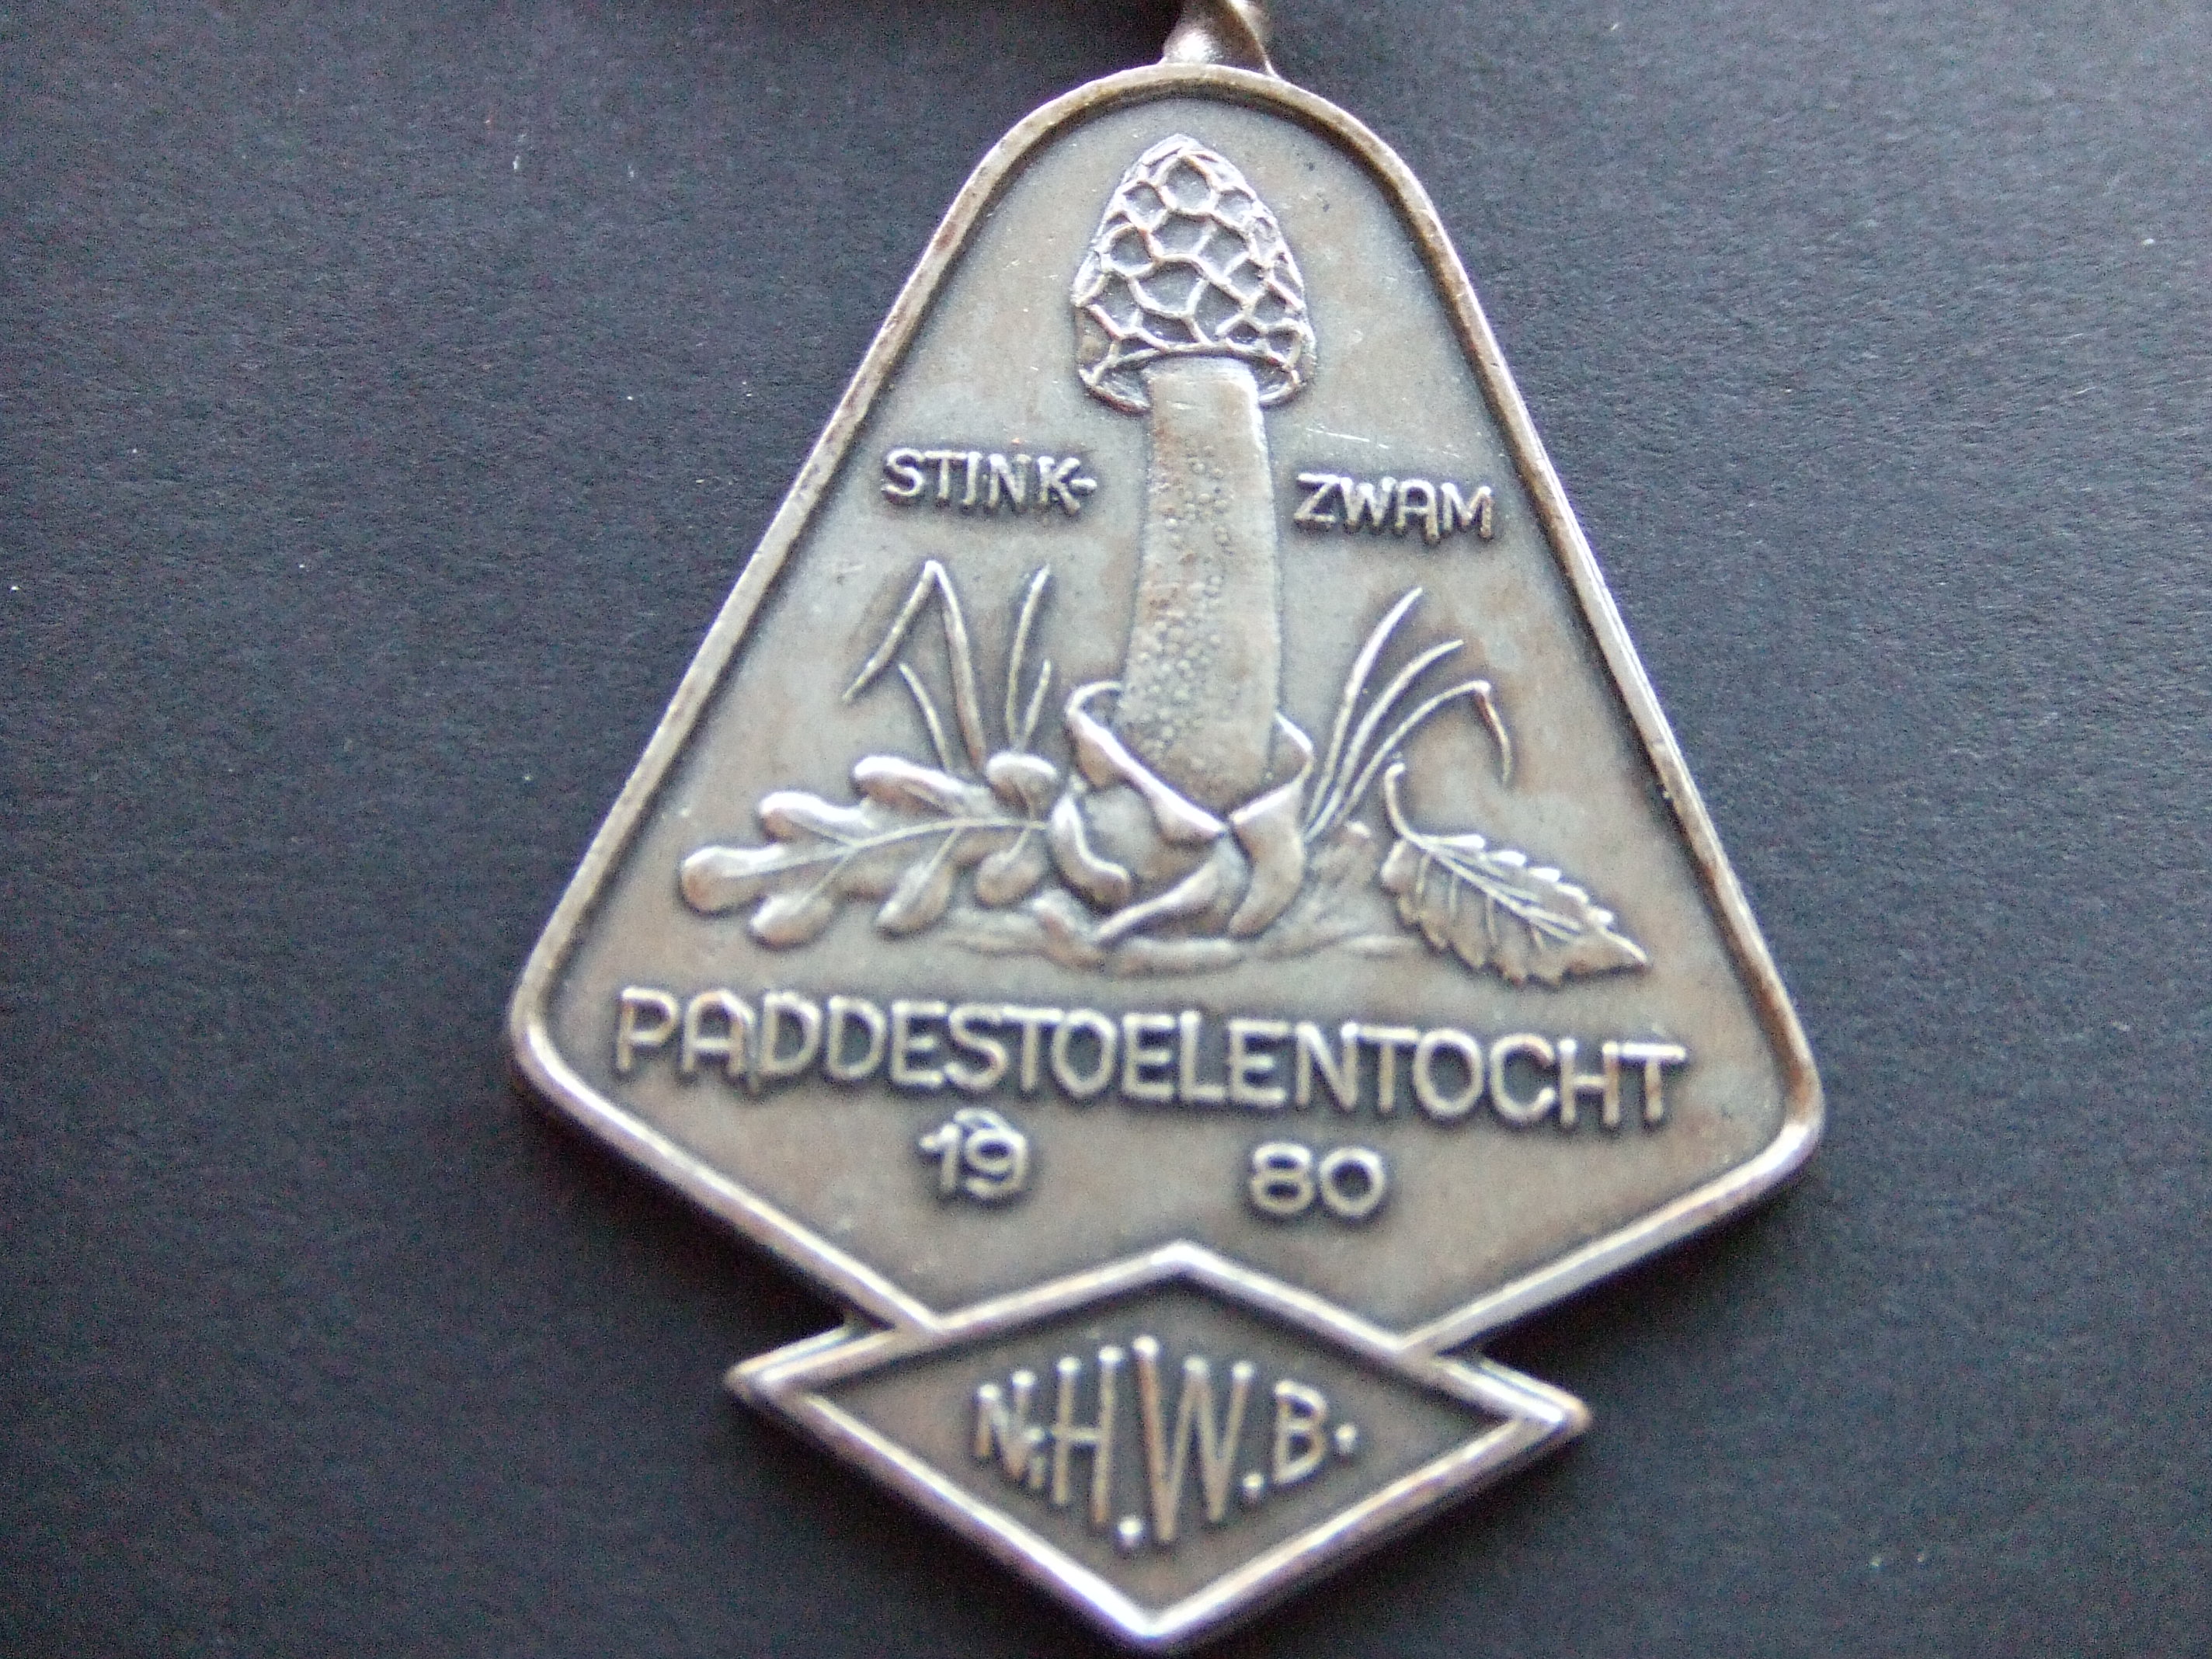 N.H.W.B(Noord-Hollandse Wandelsport Bond) Paddestoelentocht 1980  ( stinkzwam)